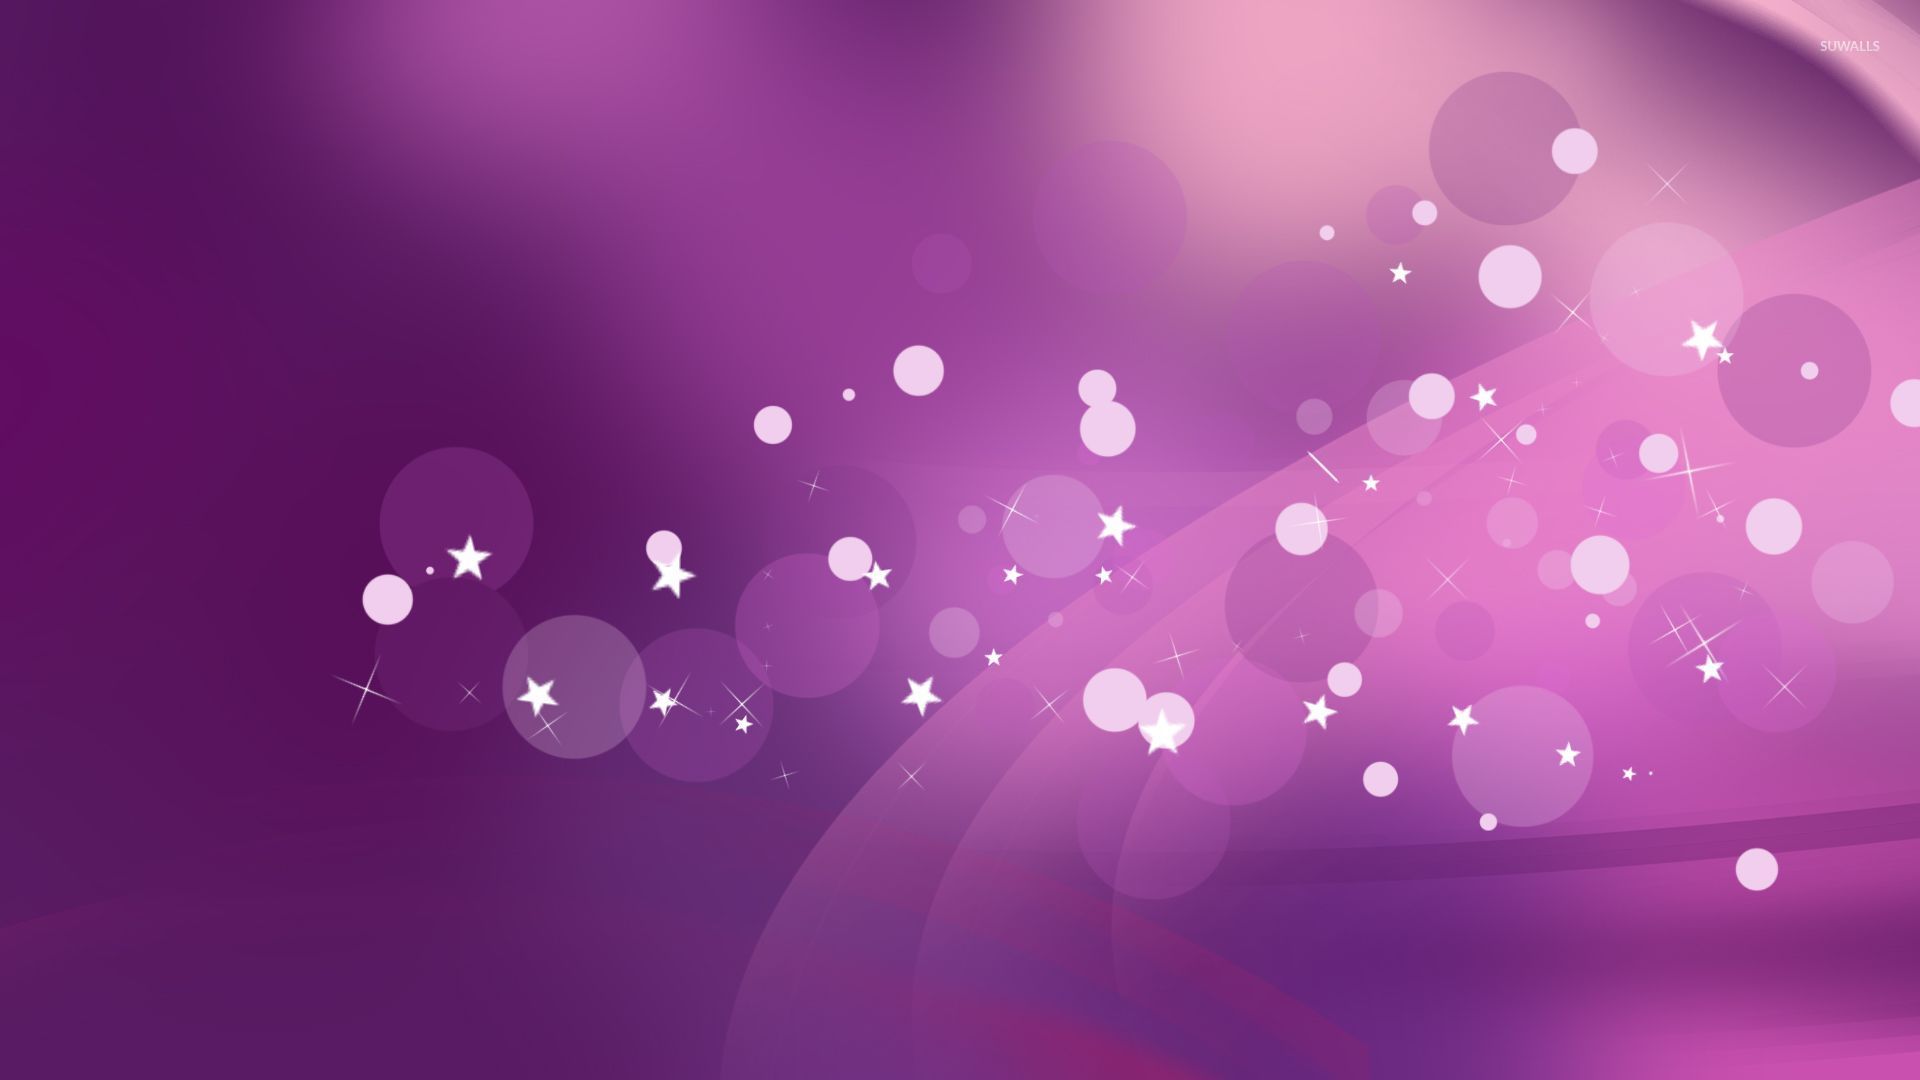 purple star wallpaper designs